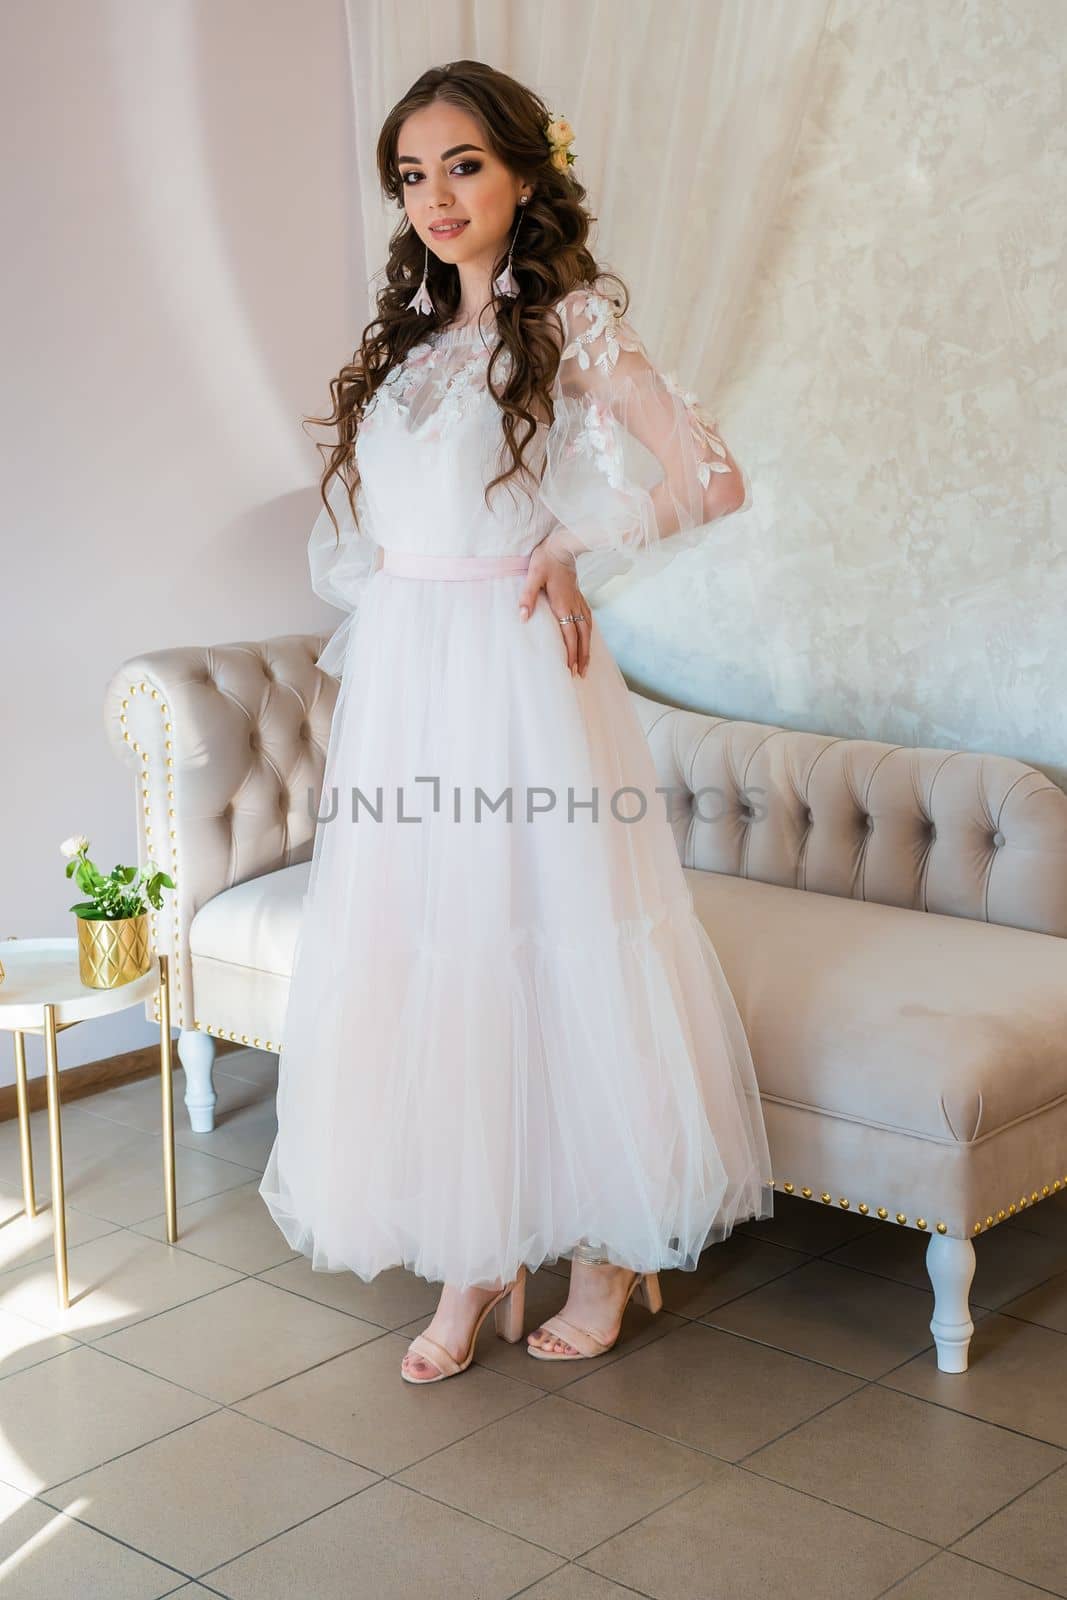 Girl model posing in a wedding dress